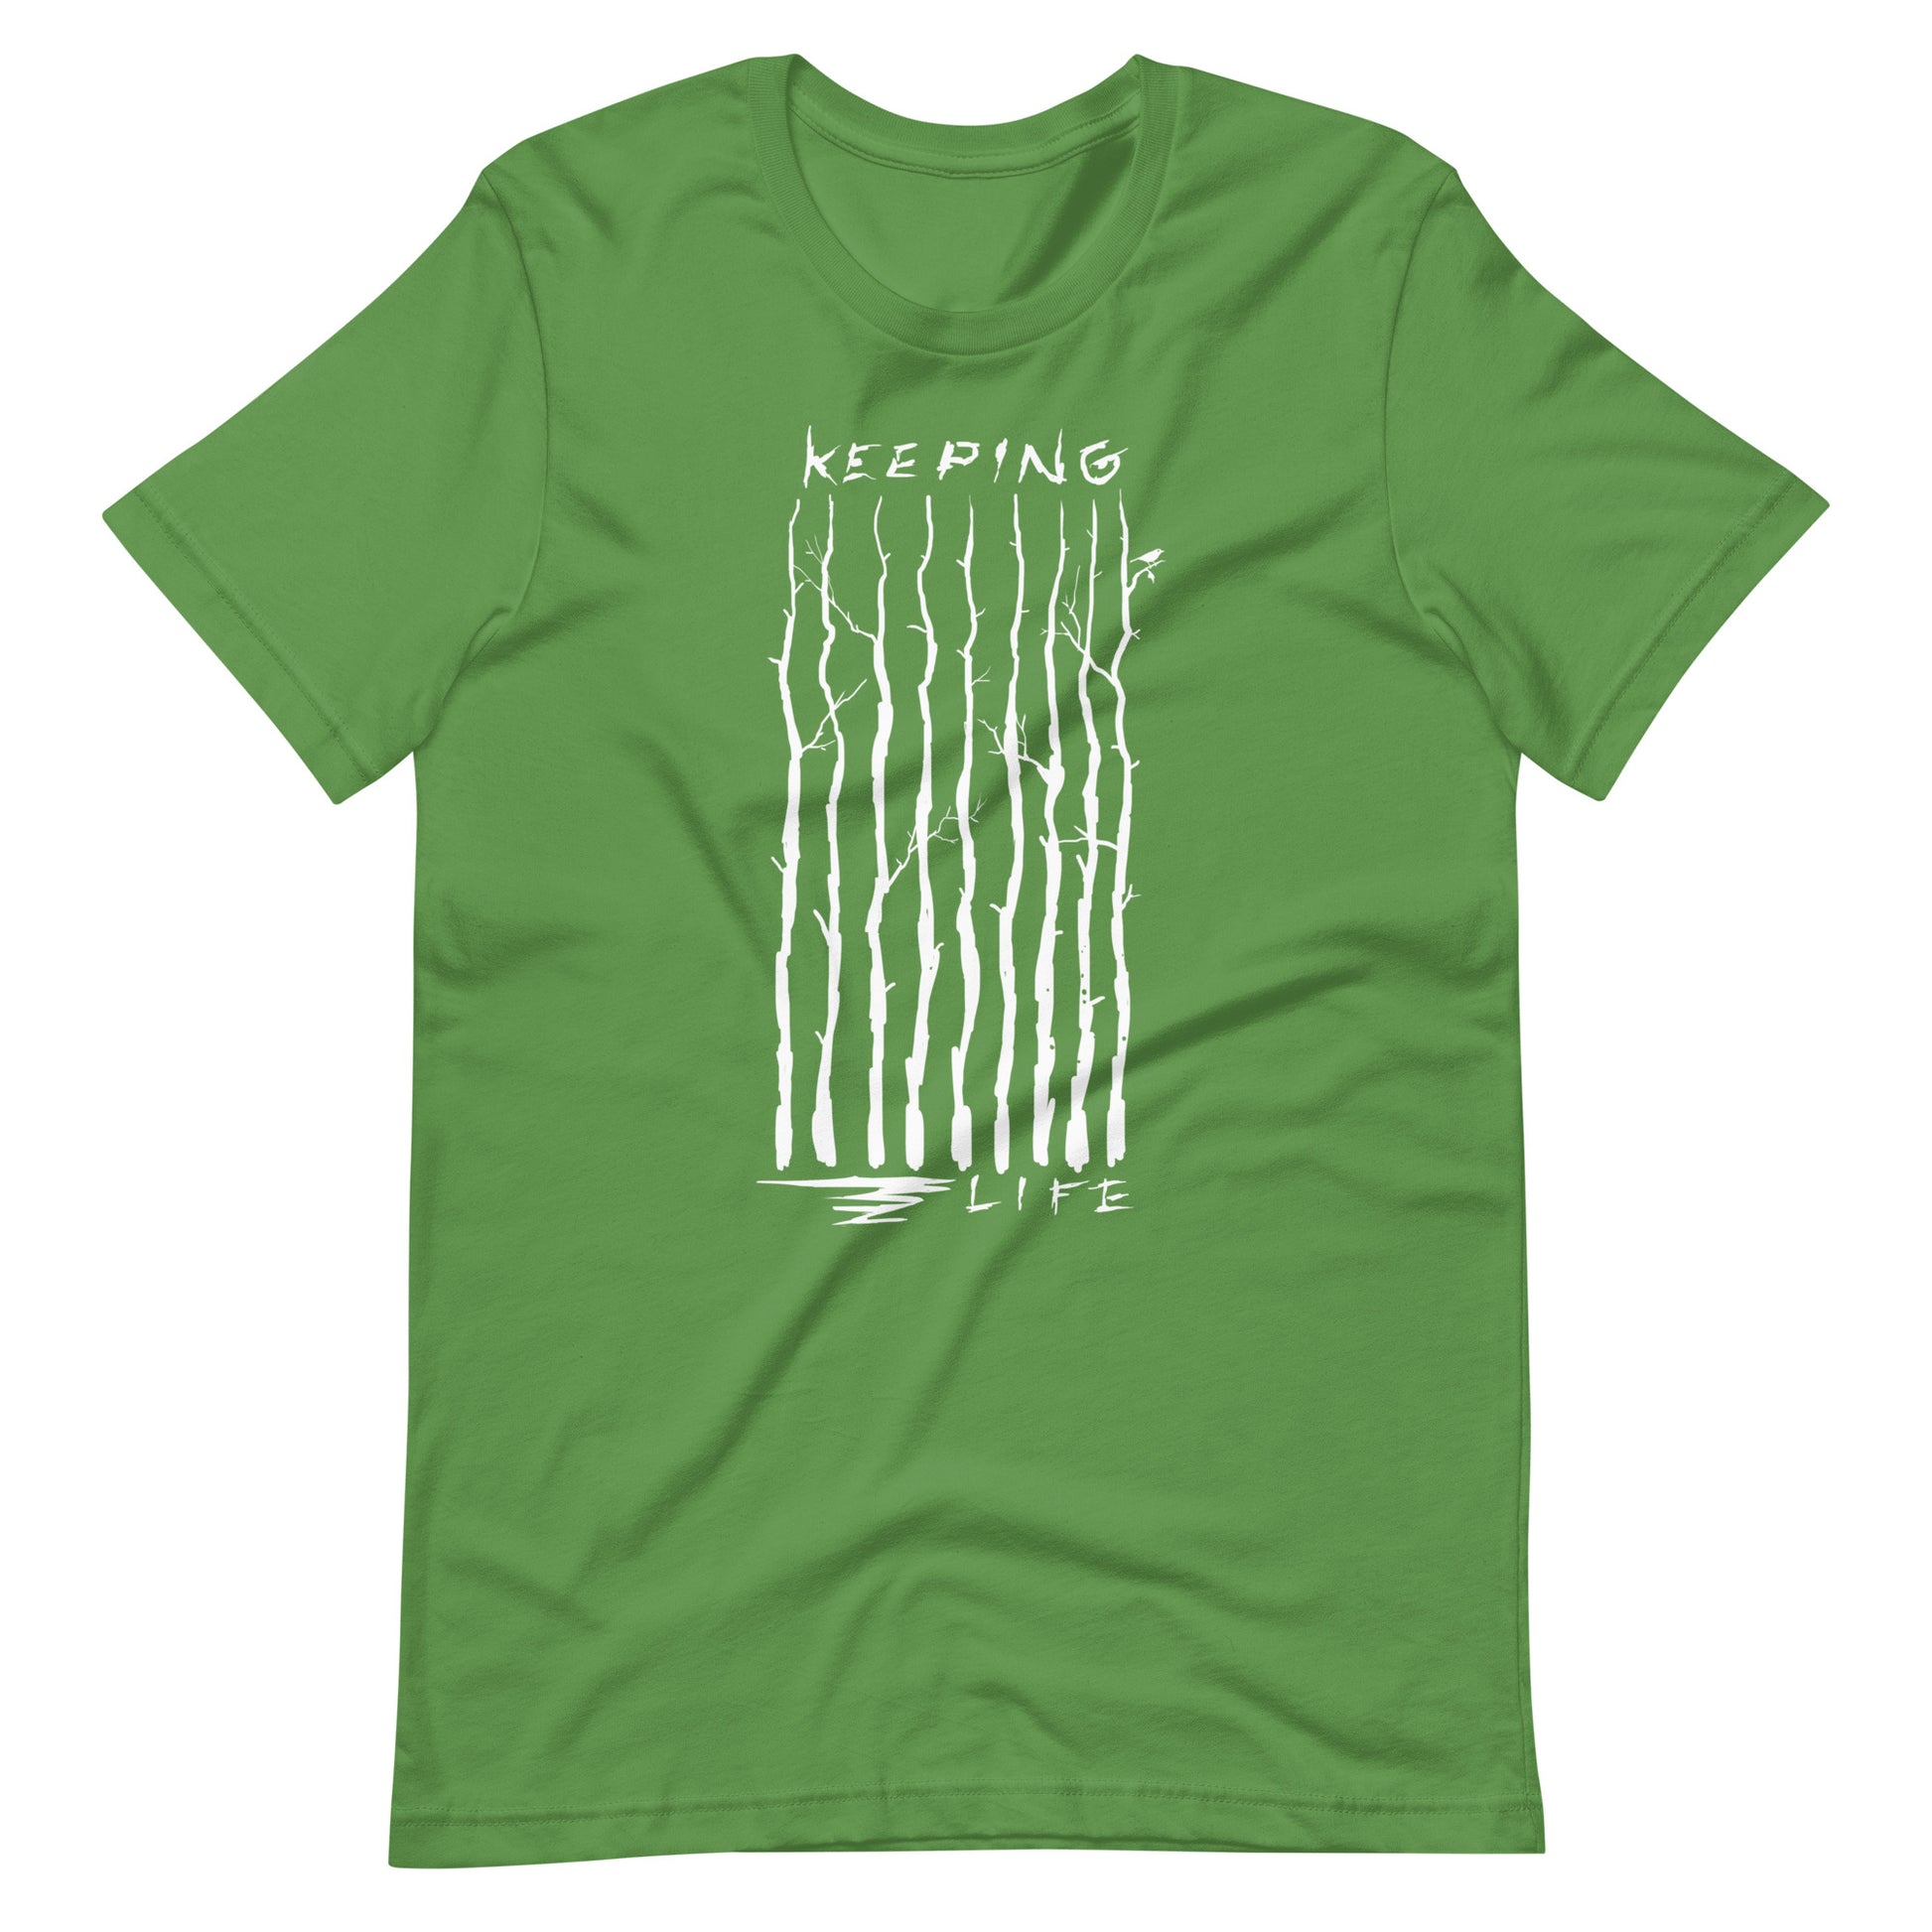 Keeping Lift - Men's t-shirt - Leaf Front